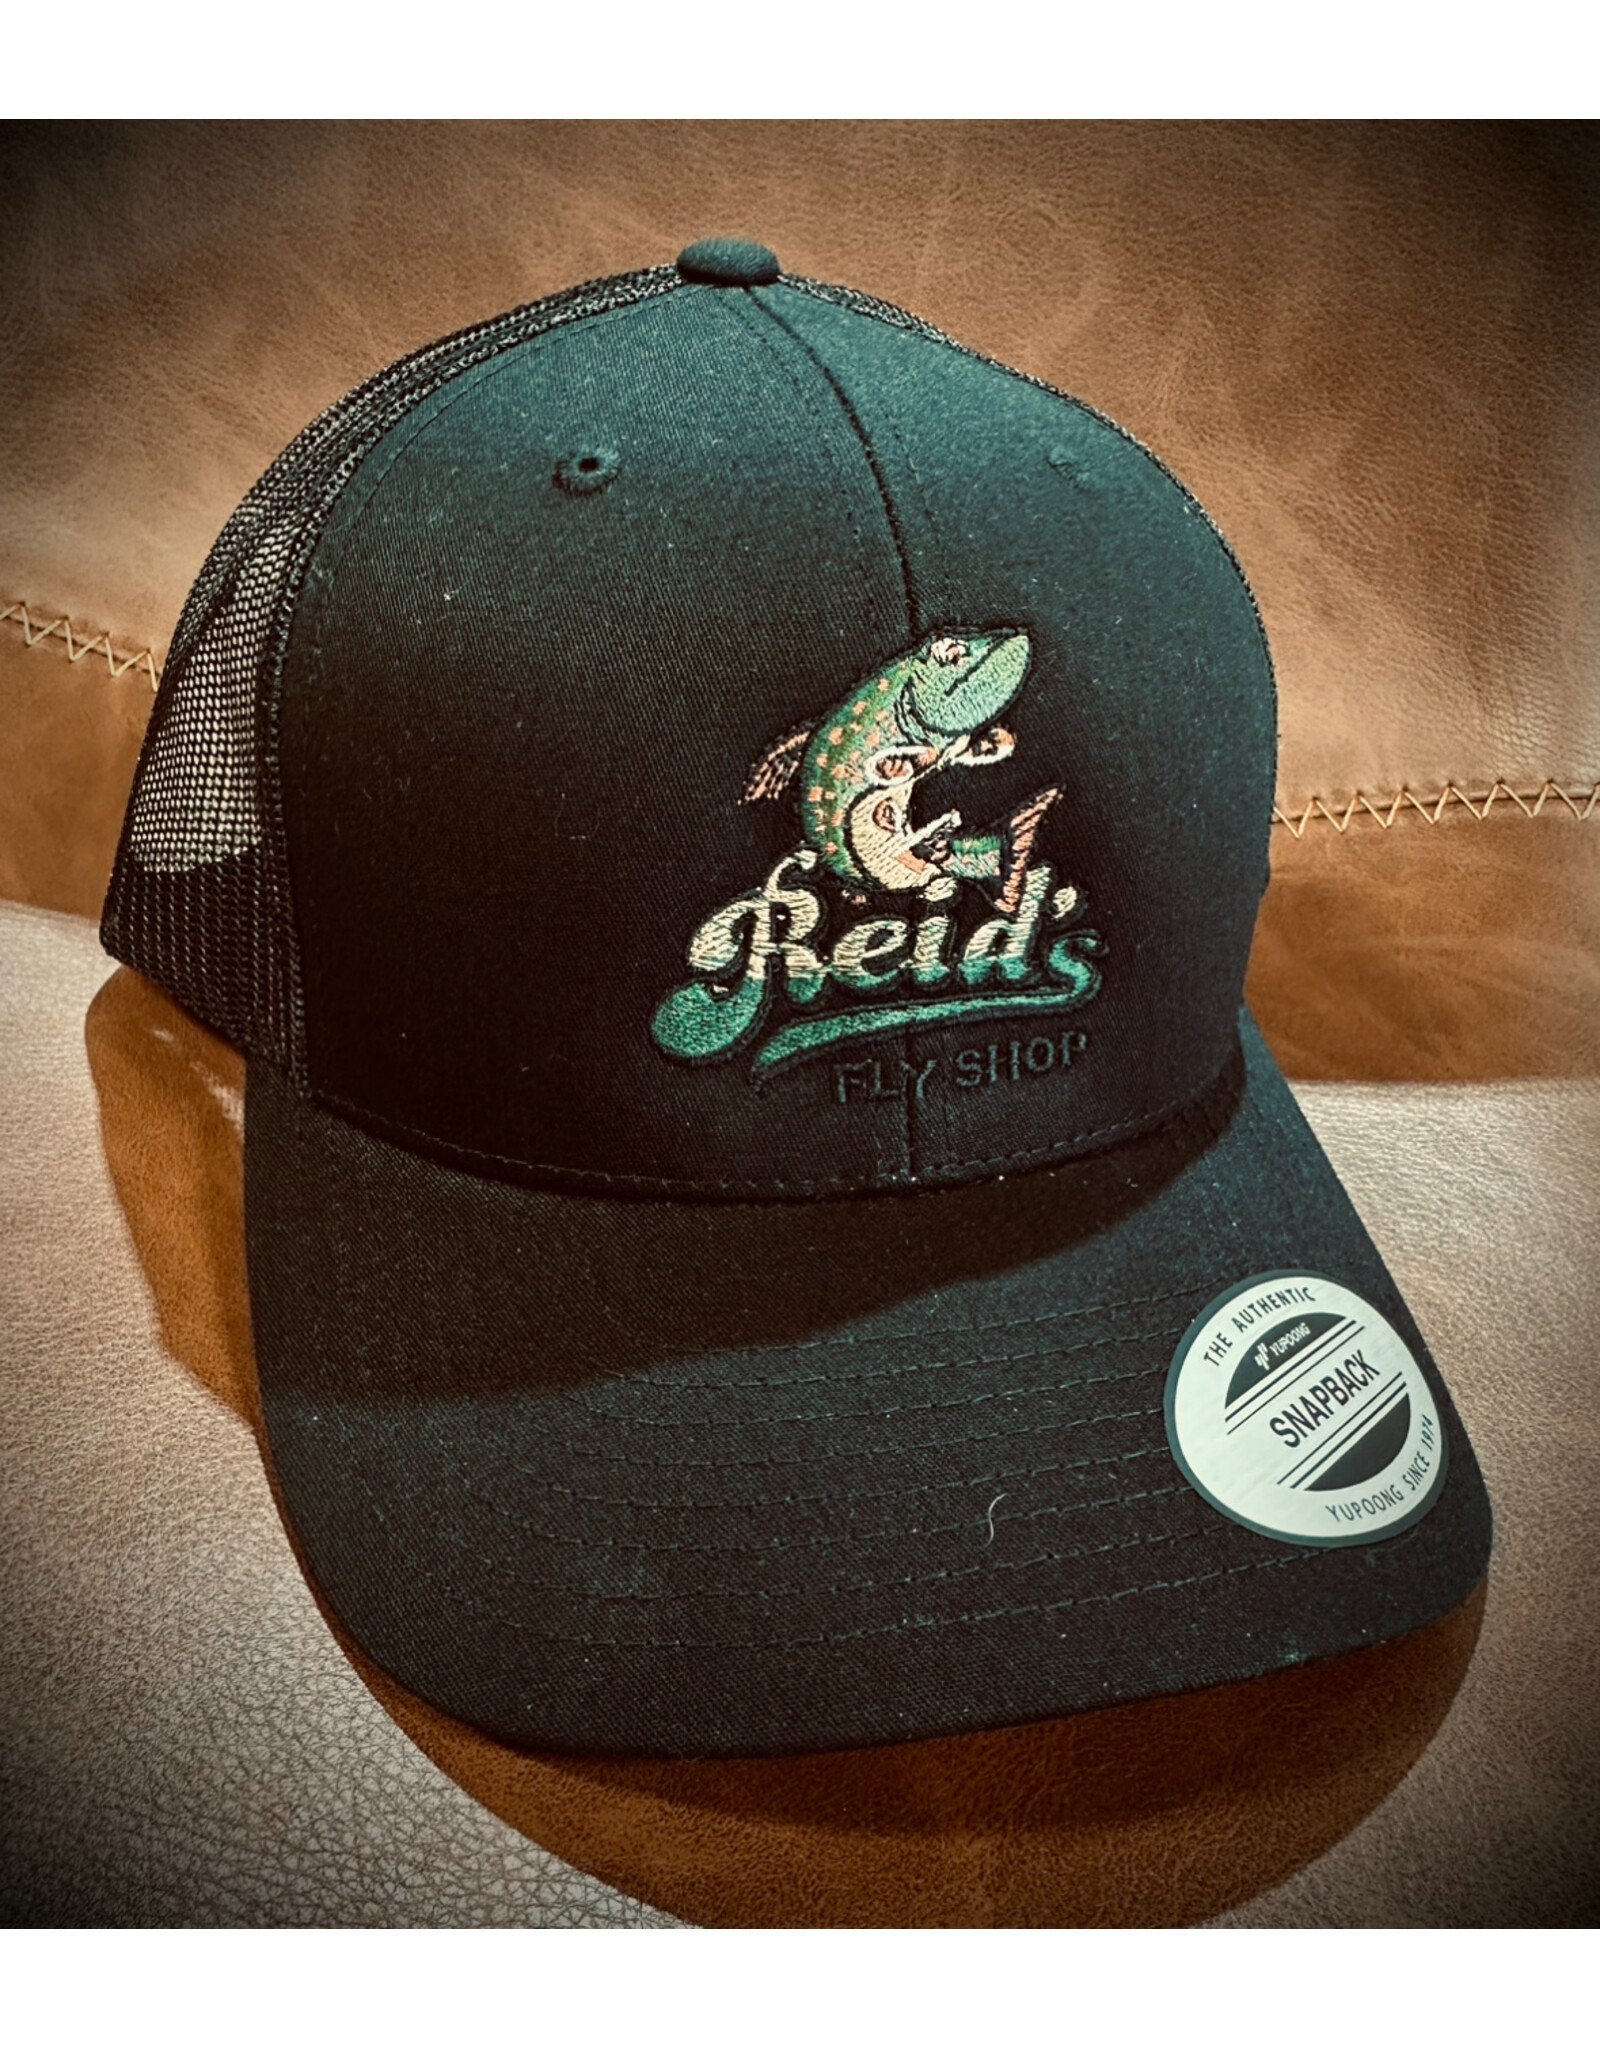 Reid's Fly Shop REID'S TRUCKER CAP - BLACK